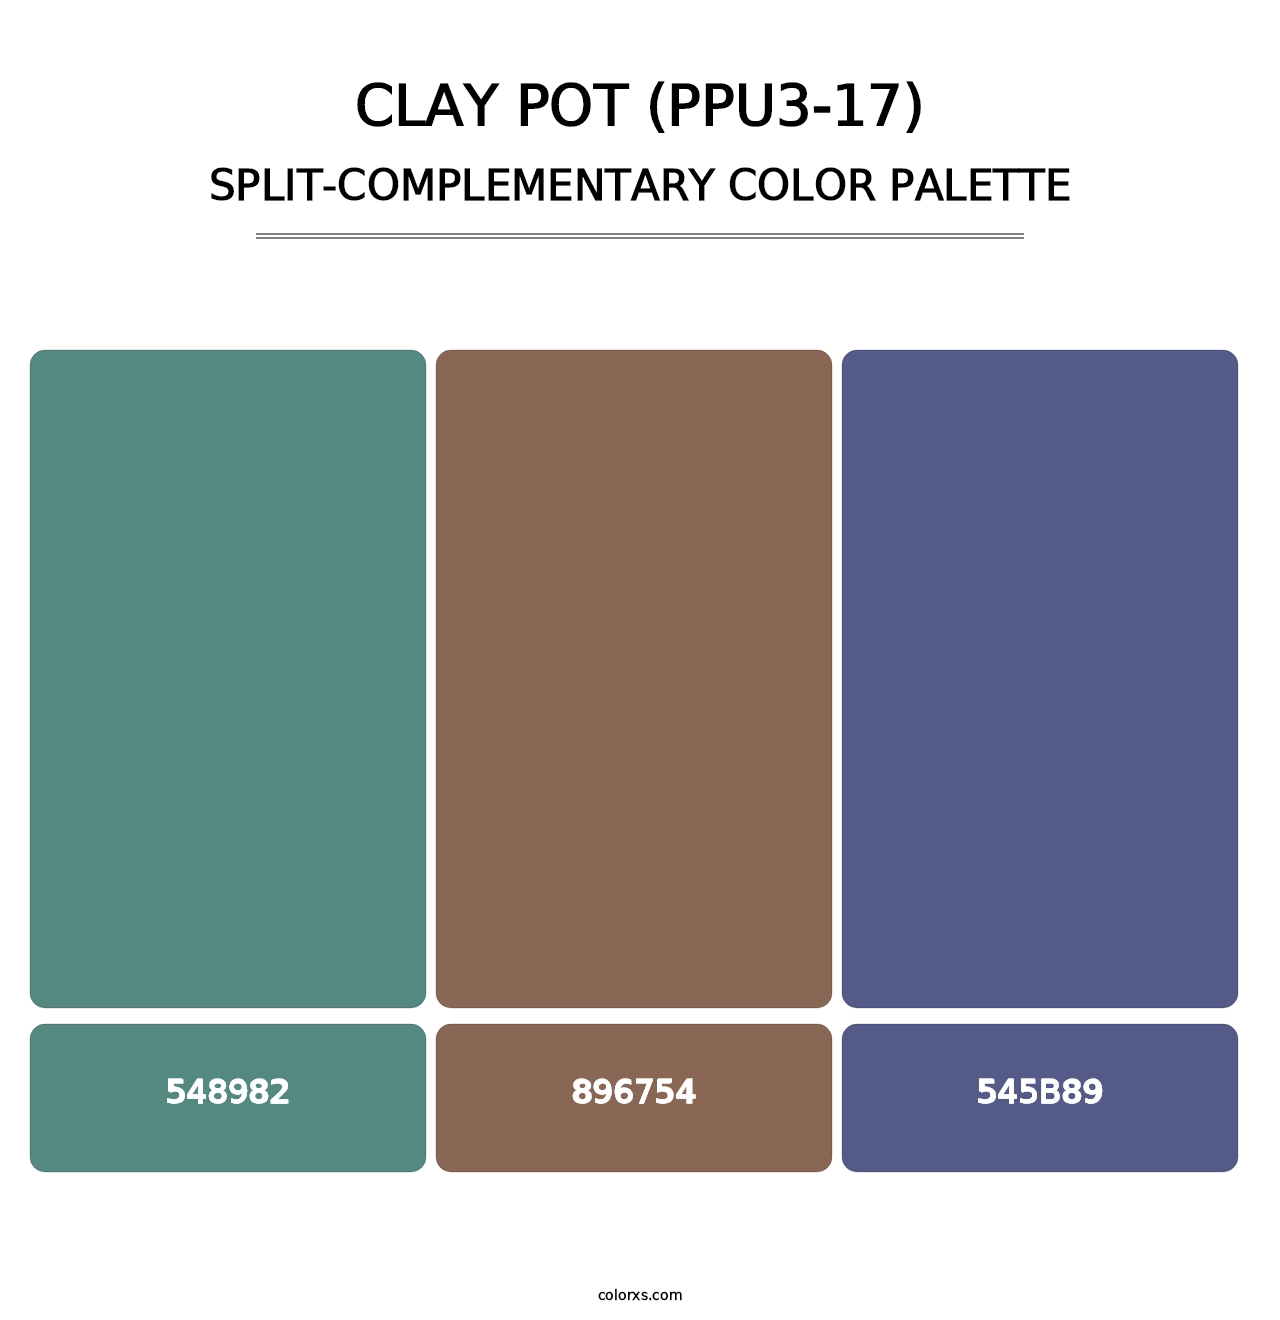 Clay Pot (PPU3-17) - Split-Complementary Color Palette